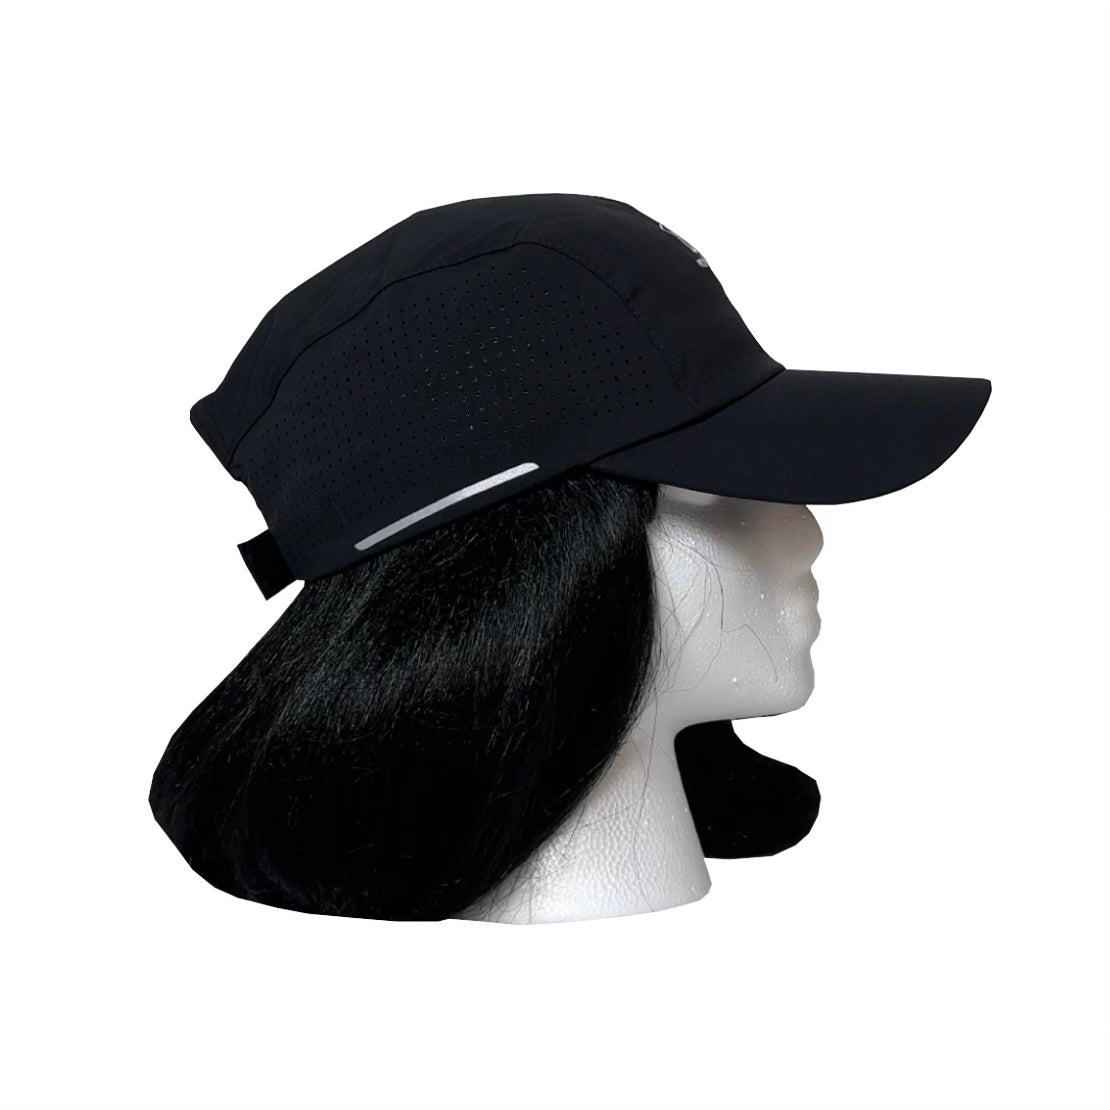 amateur run gang run hat (black)